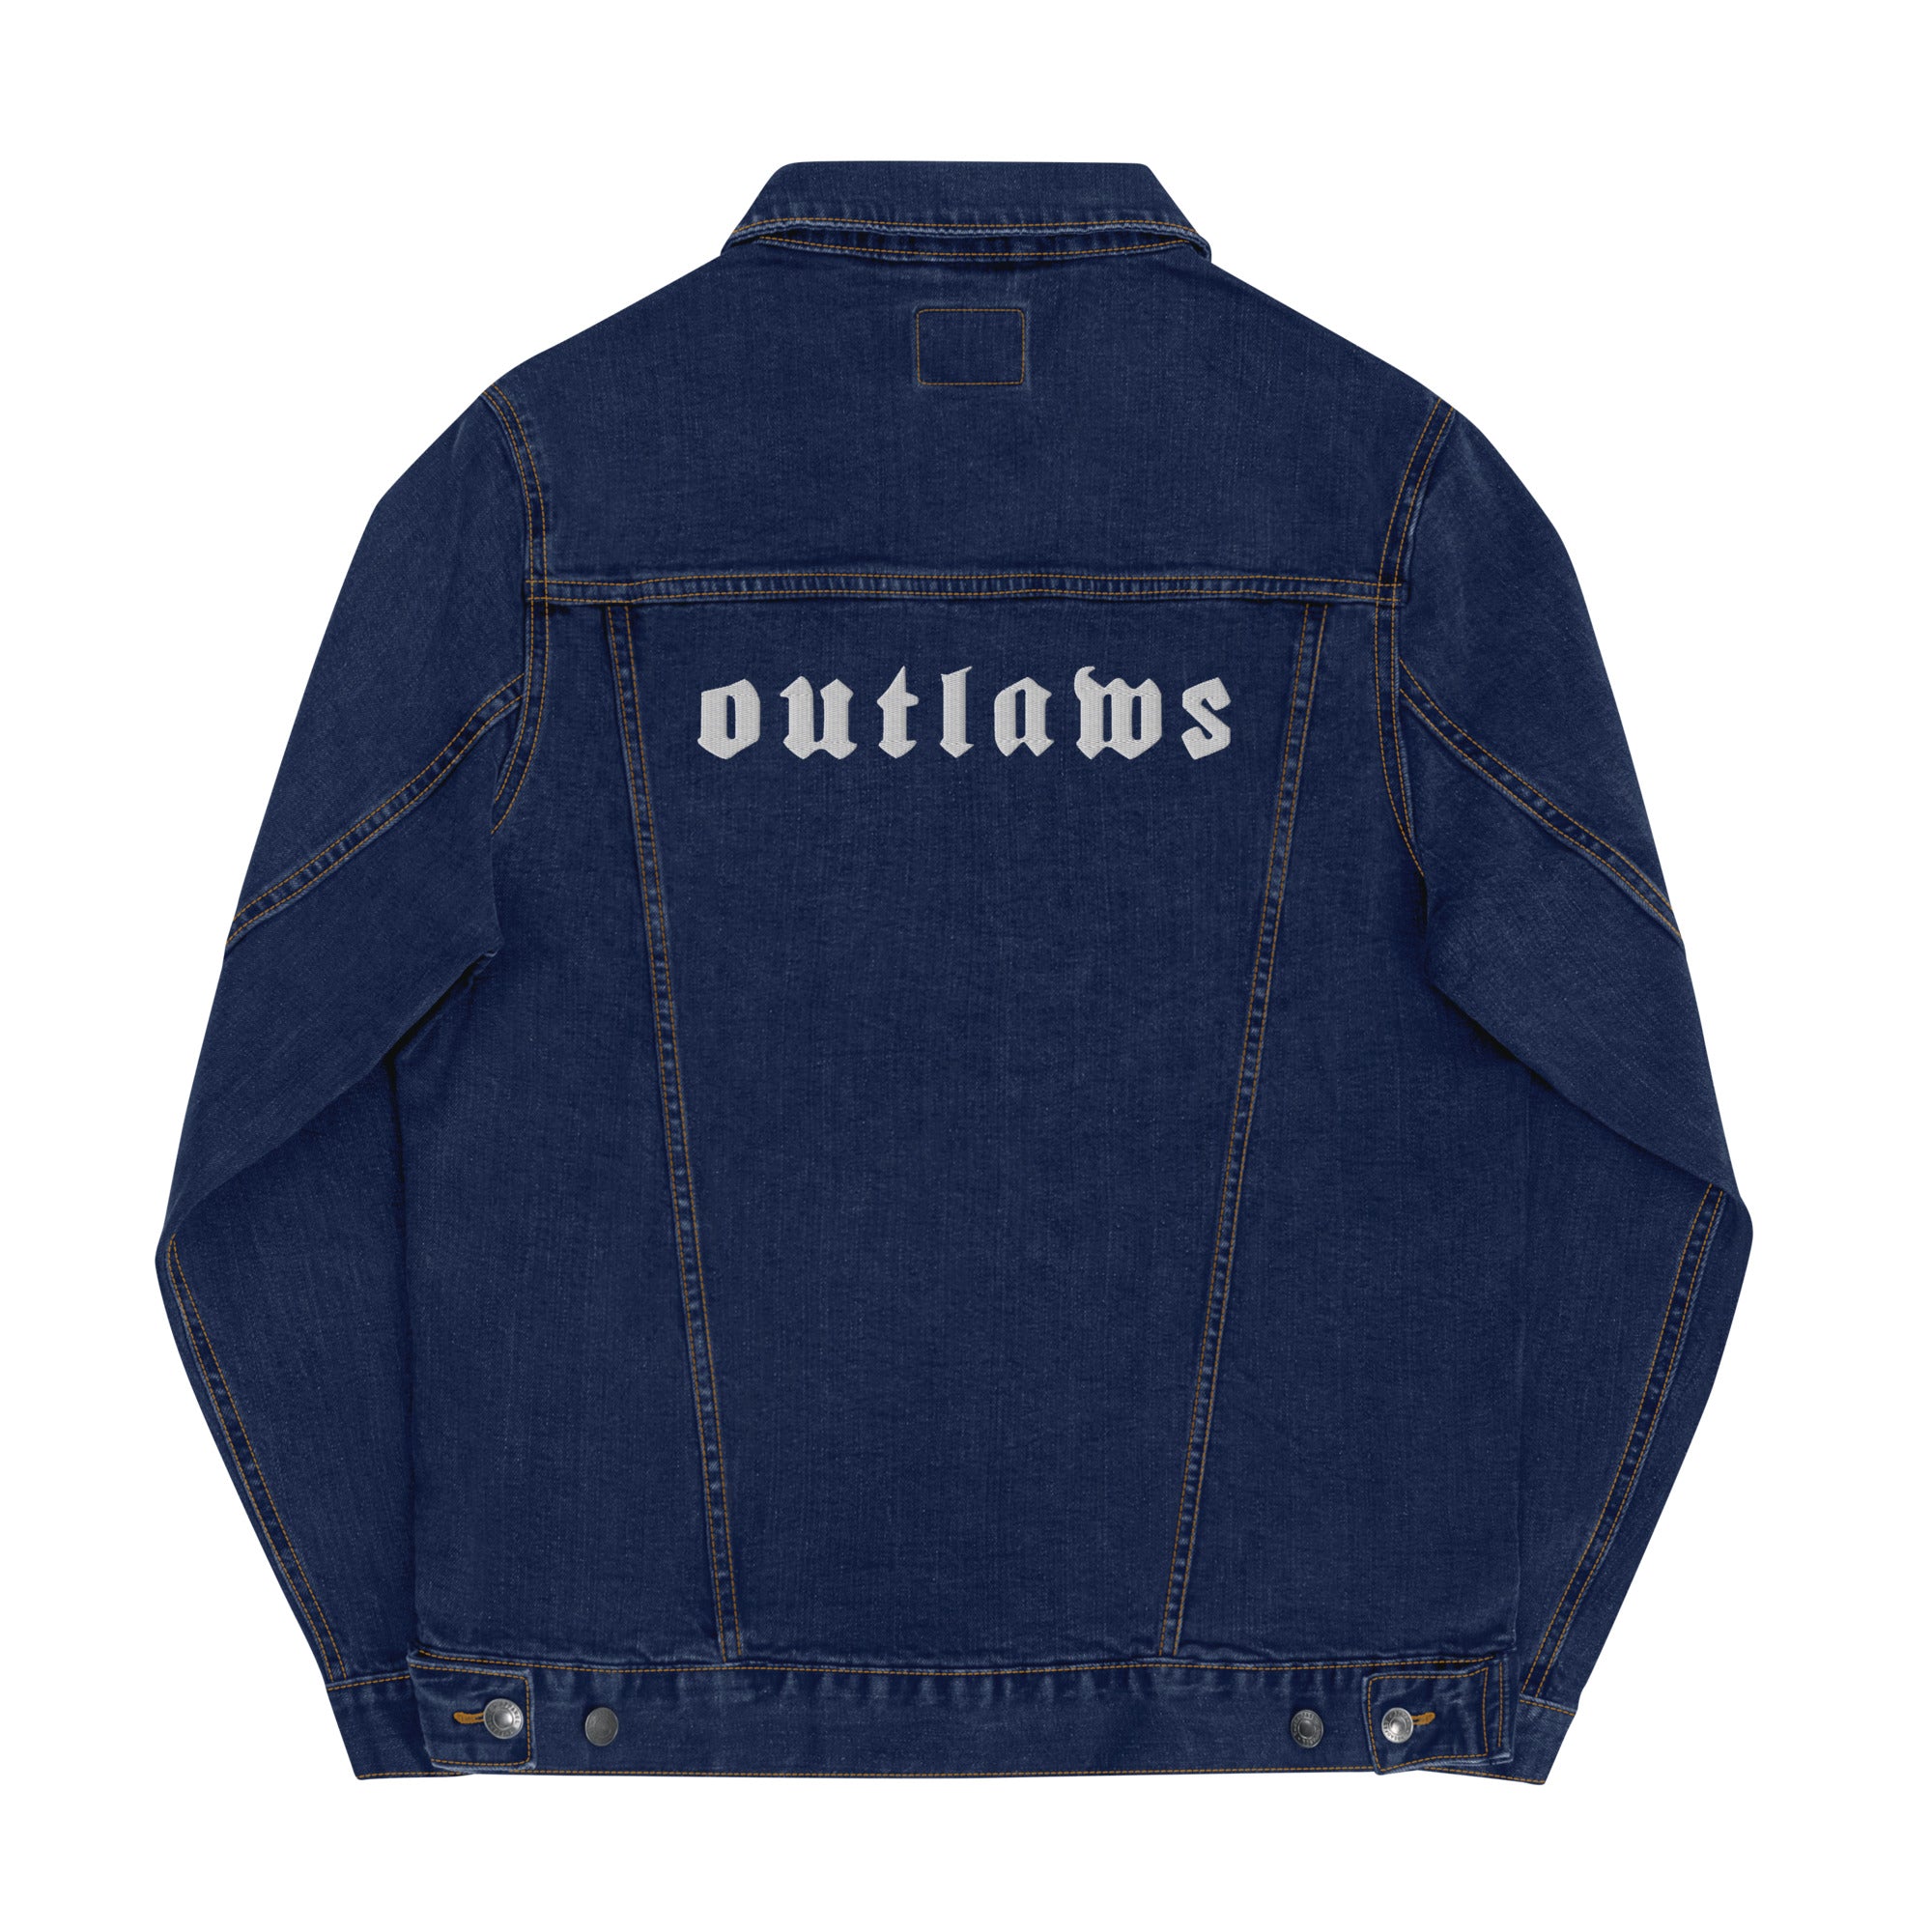 Outlaws White Unisex denim jacket